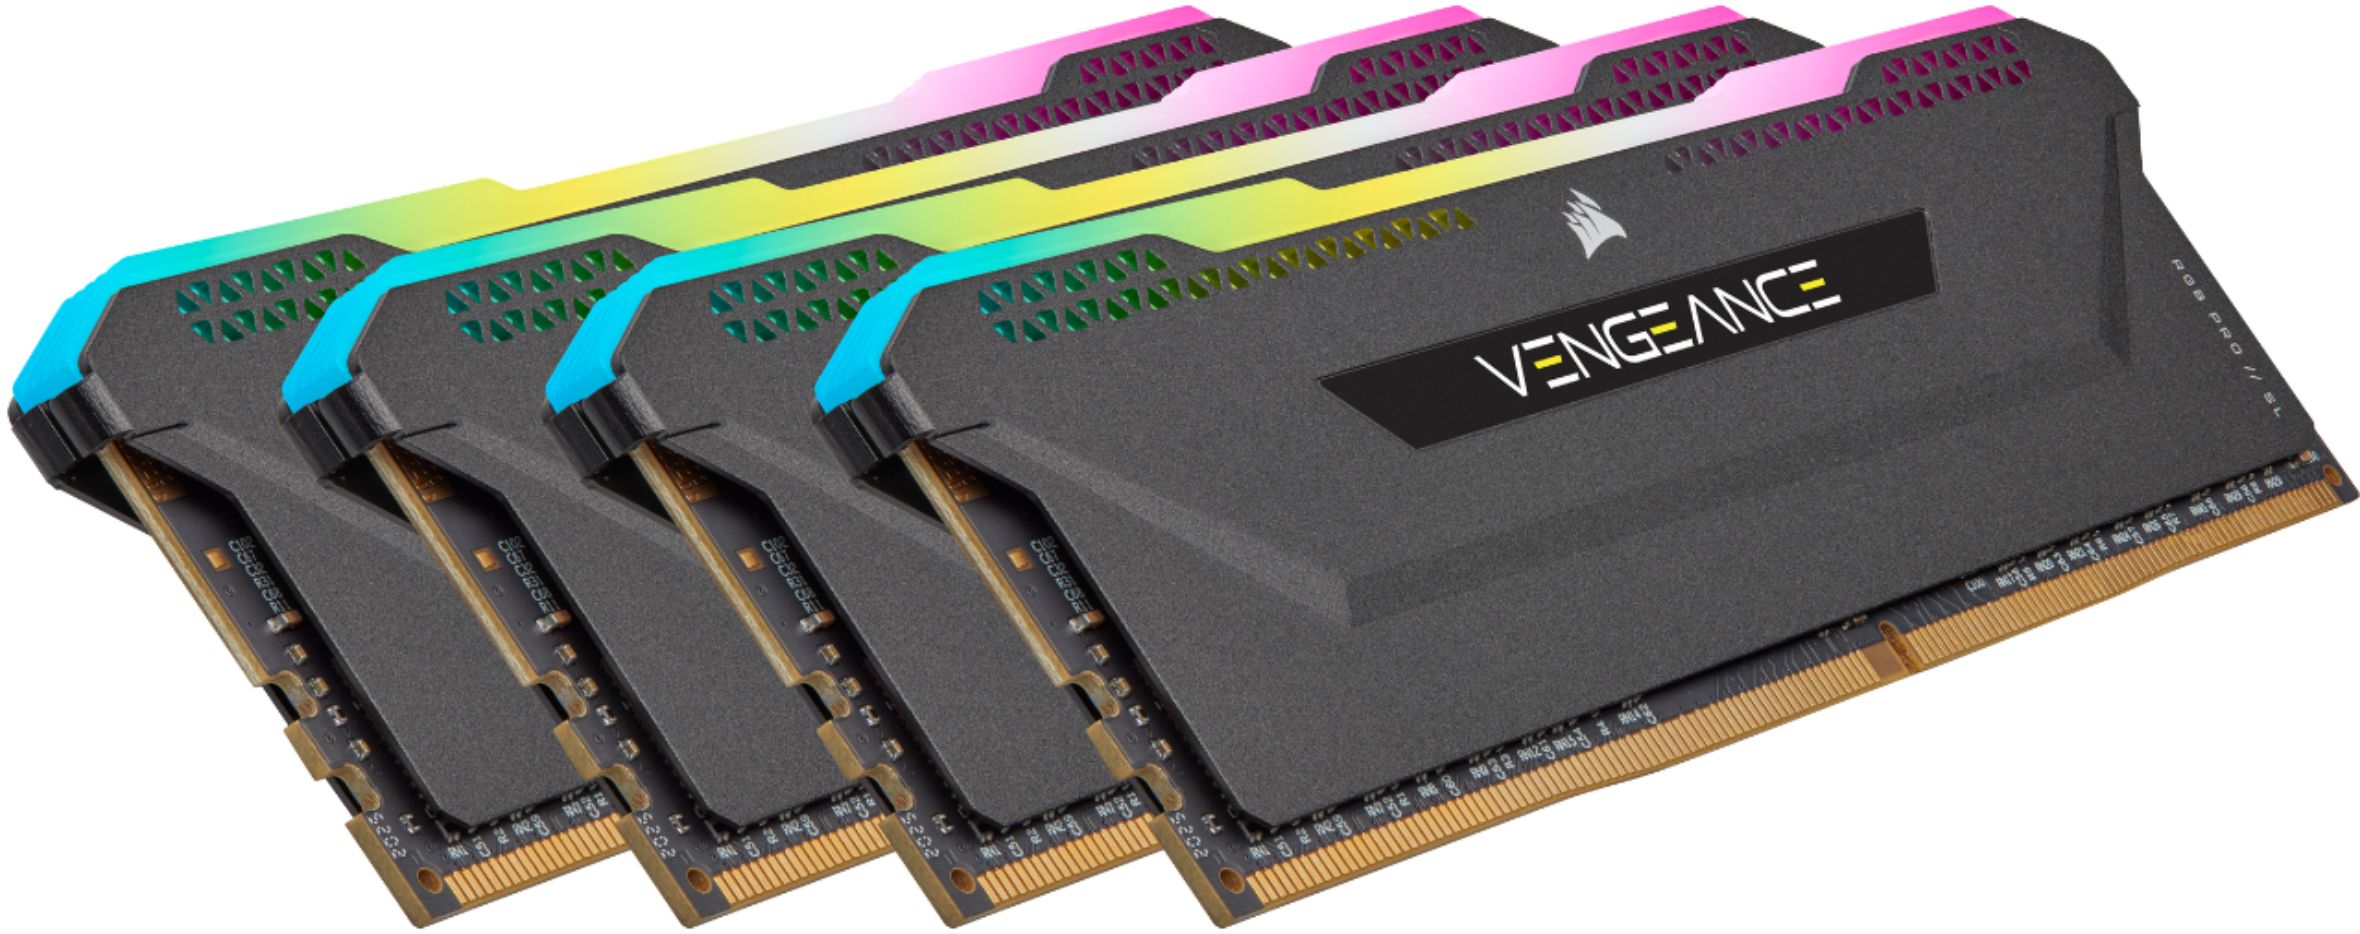 VENGEANCE RGB PRO 32GB Best - Black Desktop DDR4 (2PK CMH32GX4M2D3600C18 3600MHz C18 CORSAIR Memory x Buy 16GB) DIMM SL